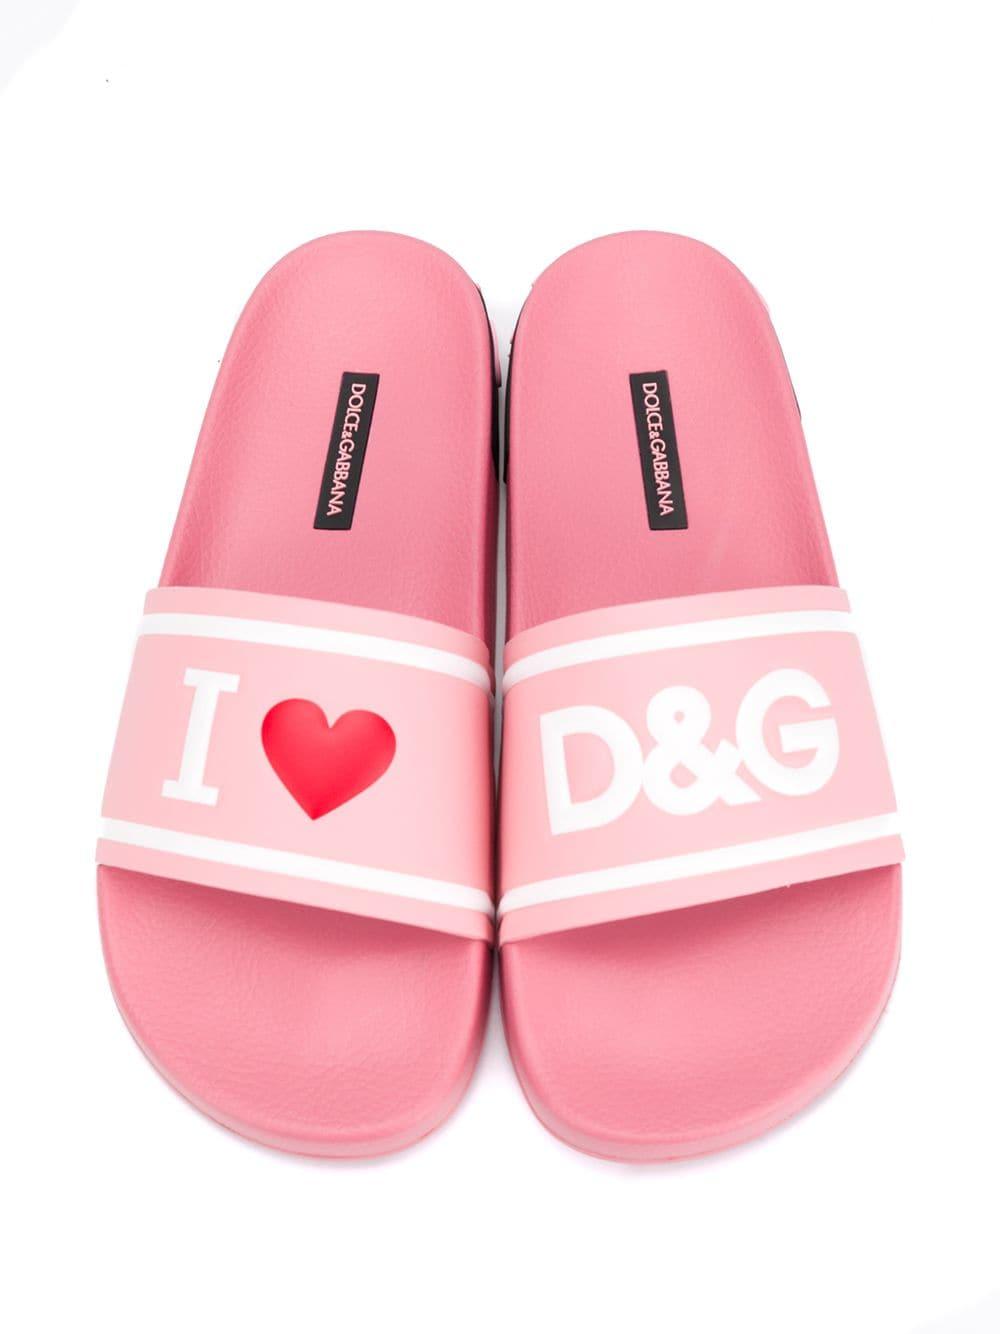 Dolce & Gabbana I Love D&g Slide Sandals in Pink - Lyst